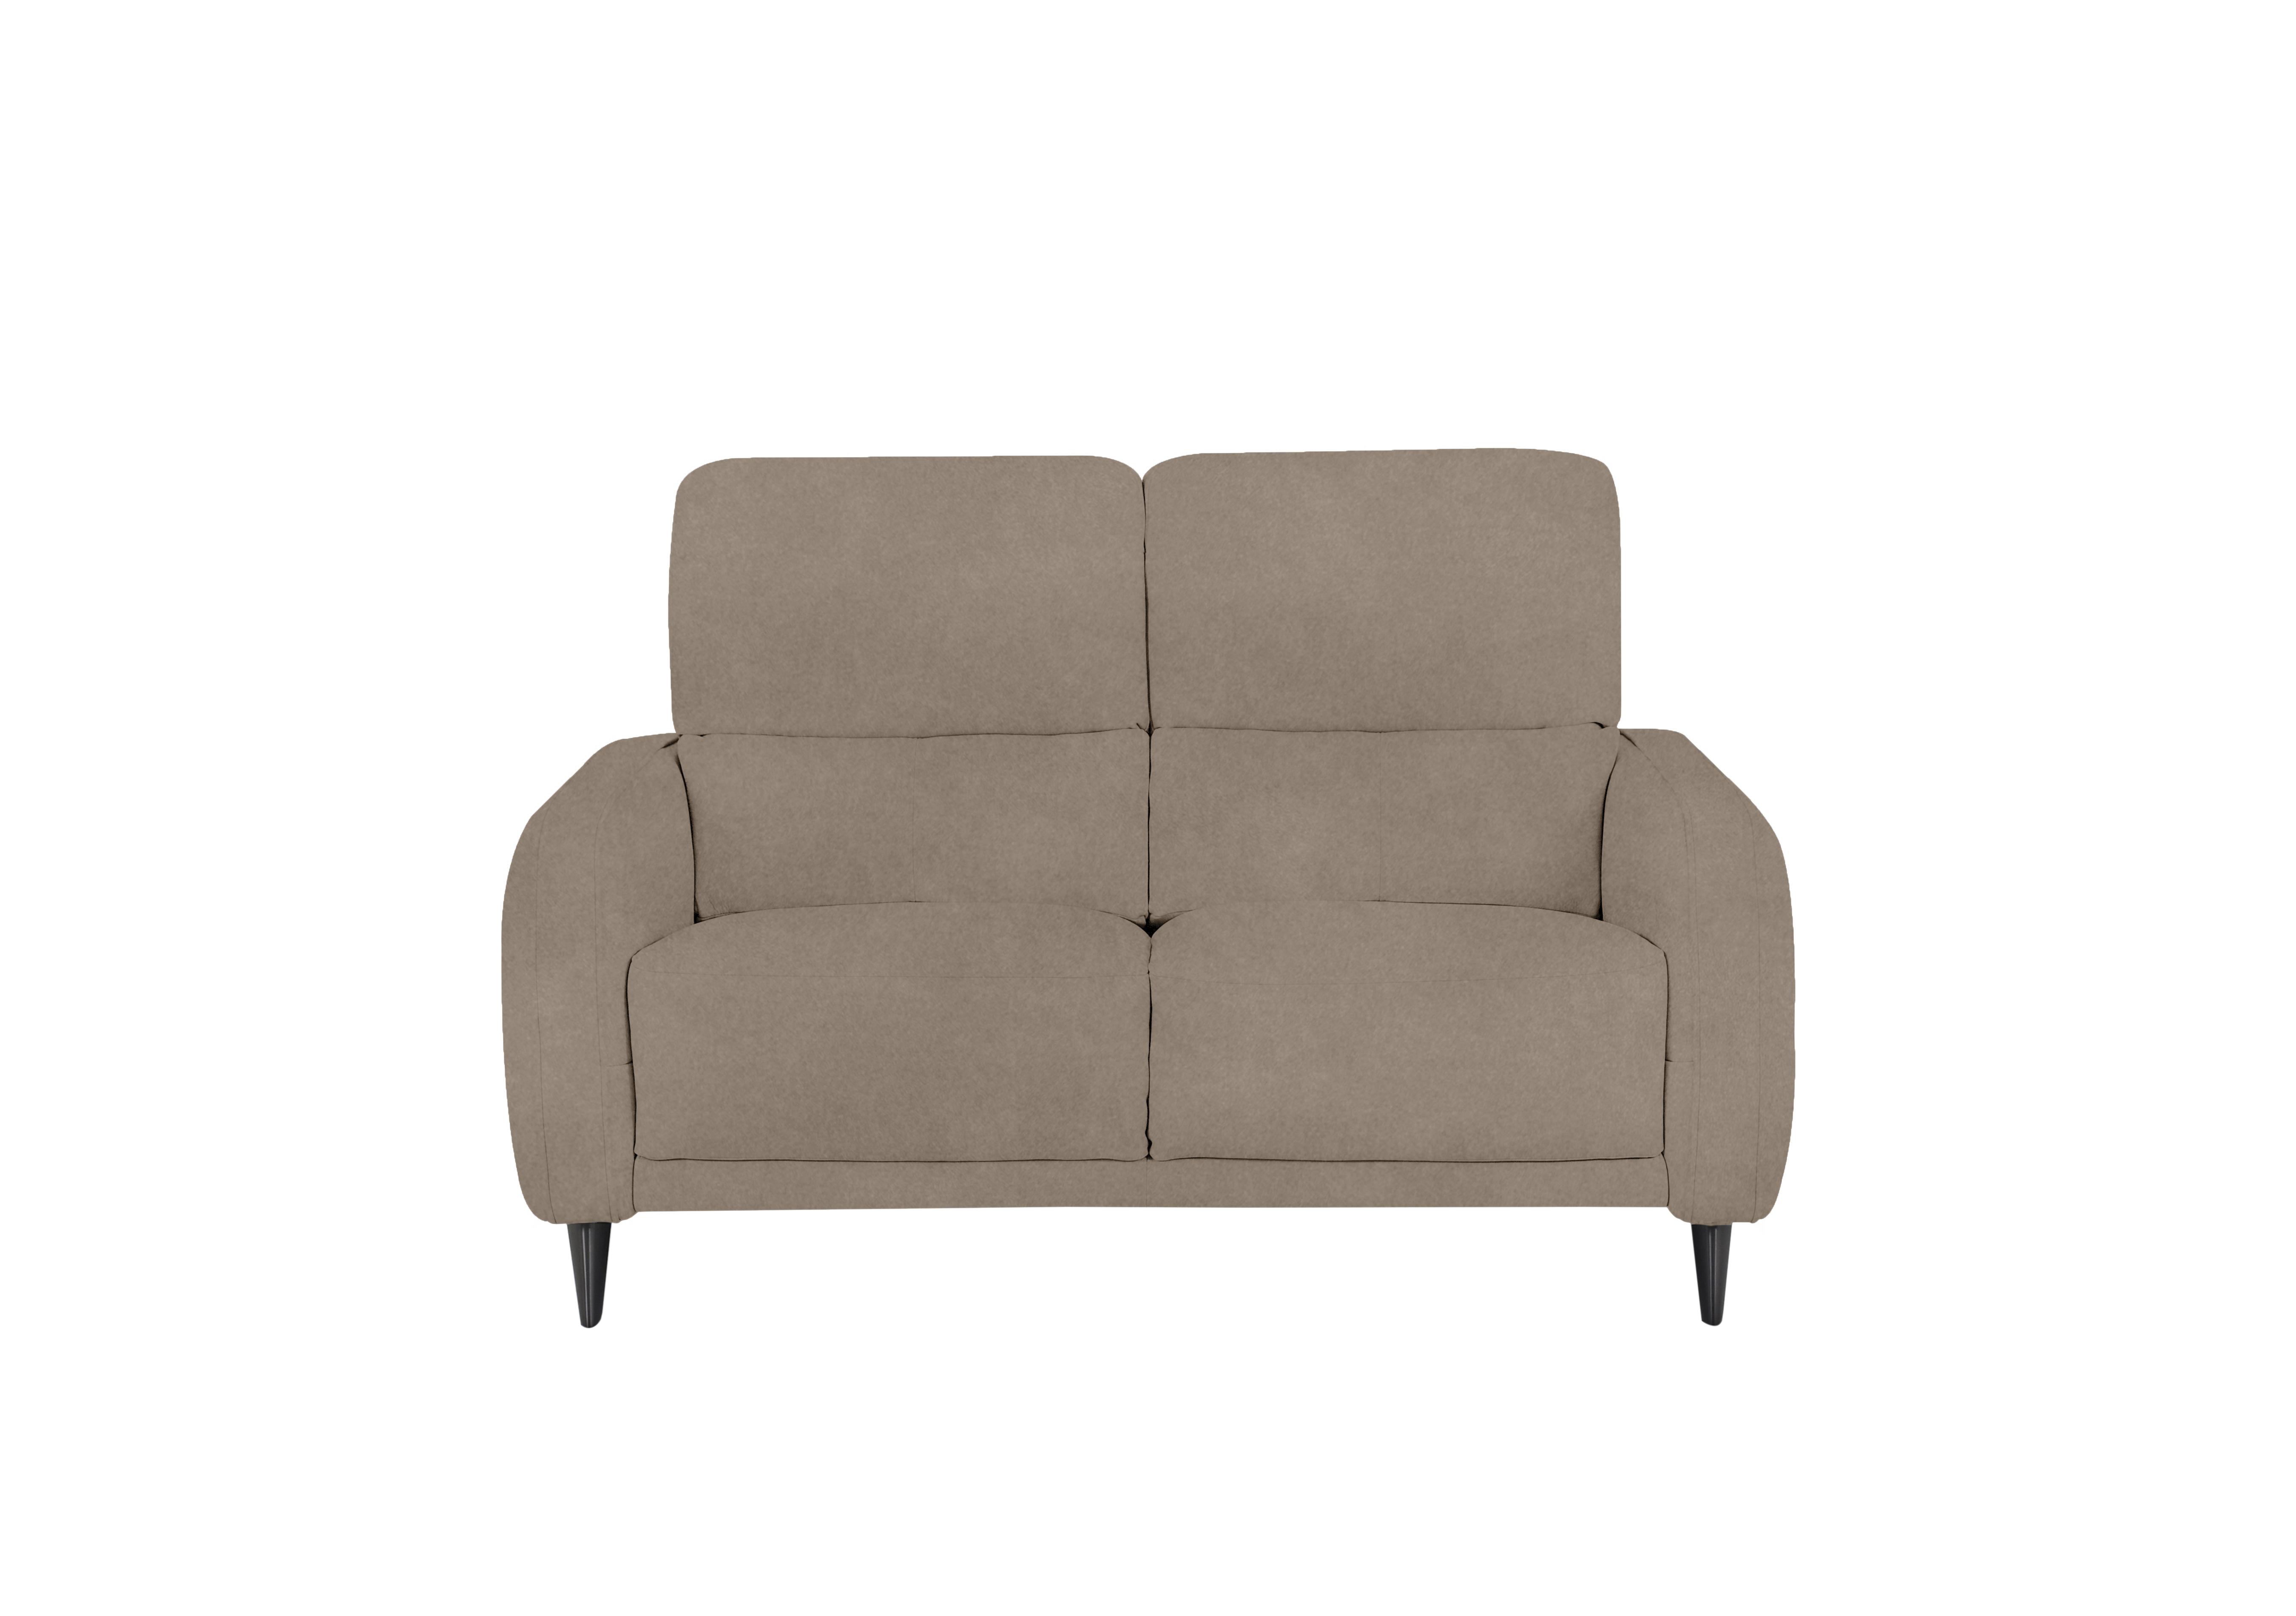 Logan 2 Seater Fabric Sofa in Fab-Meg-R32 Light Khaki on Furniture Village